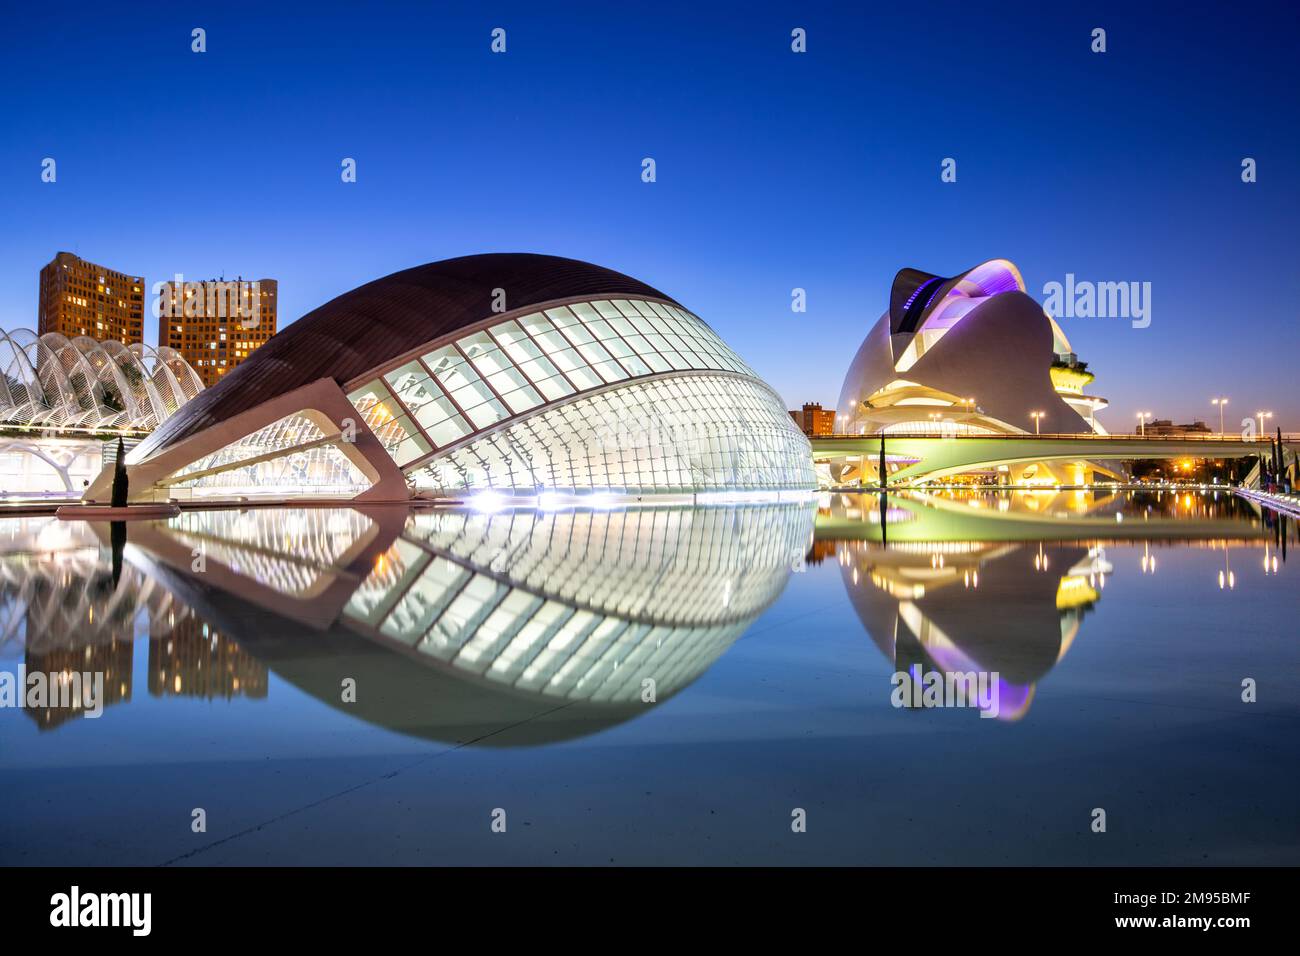 Valencia, Spanien - 17. Februar 2022: Ciutat de les Arts i les Ciencies Moderne Architektur von Santiago Calatrava bei Nacht in Valencia, Spanien. Stockfoto